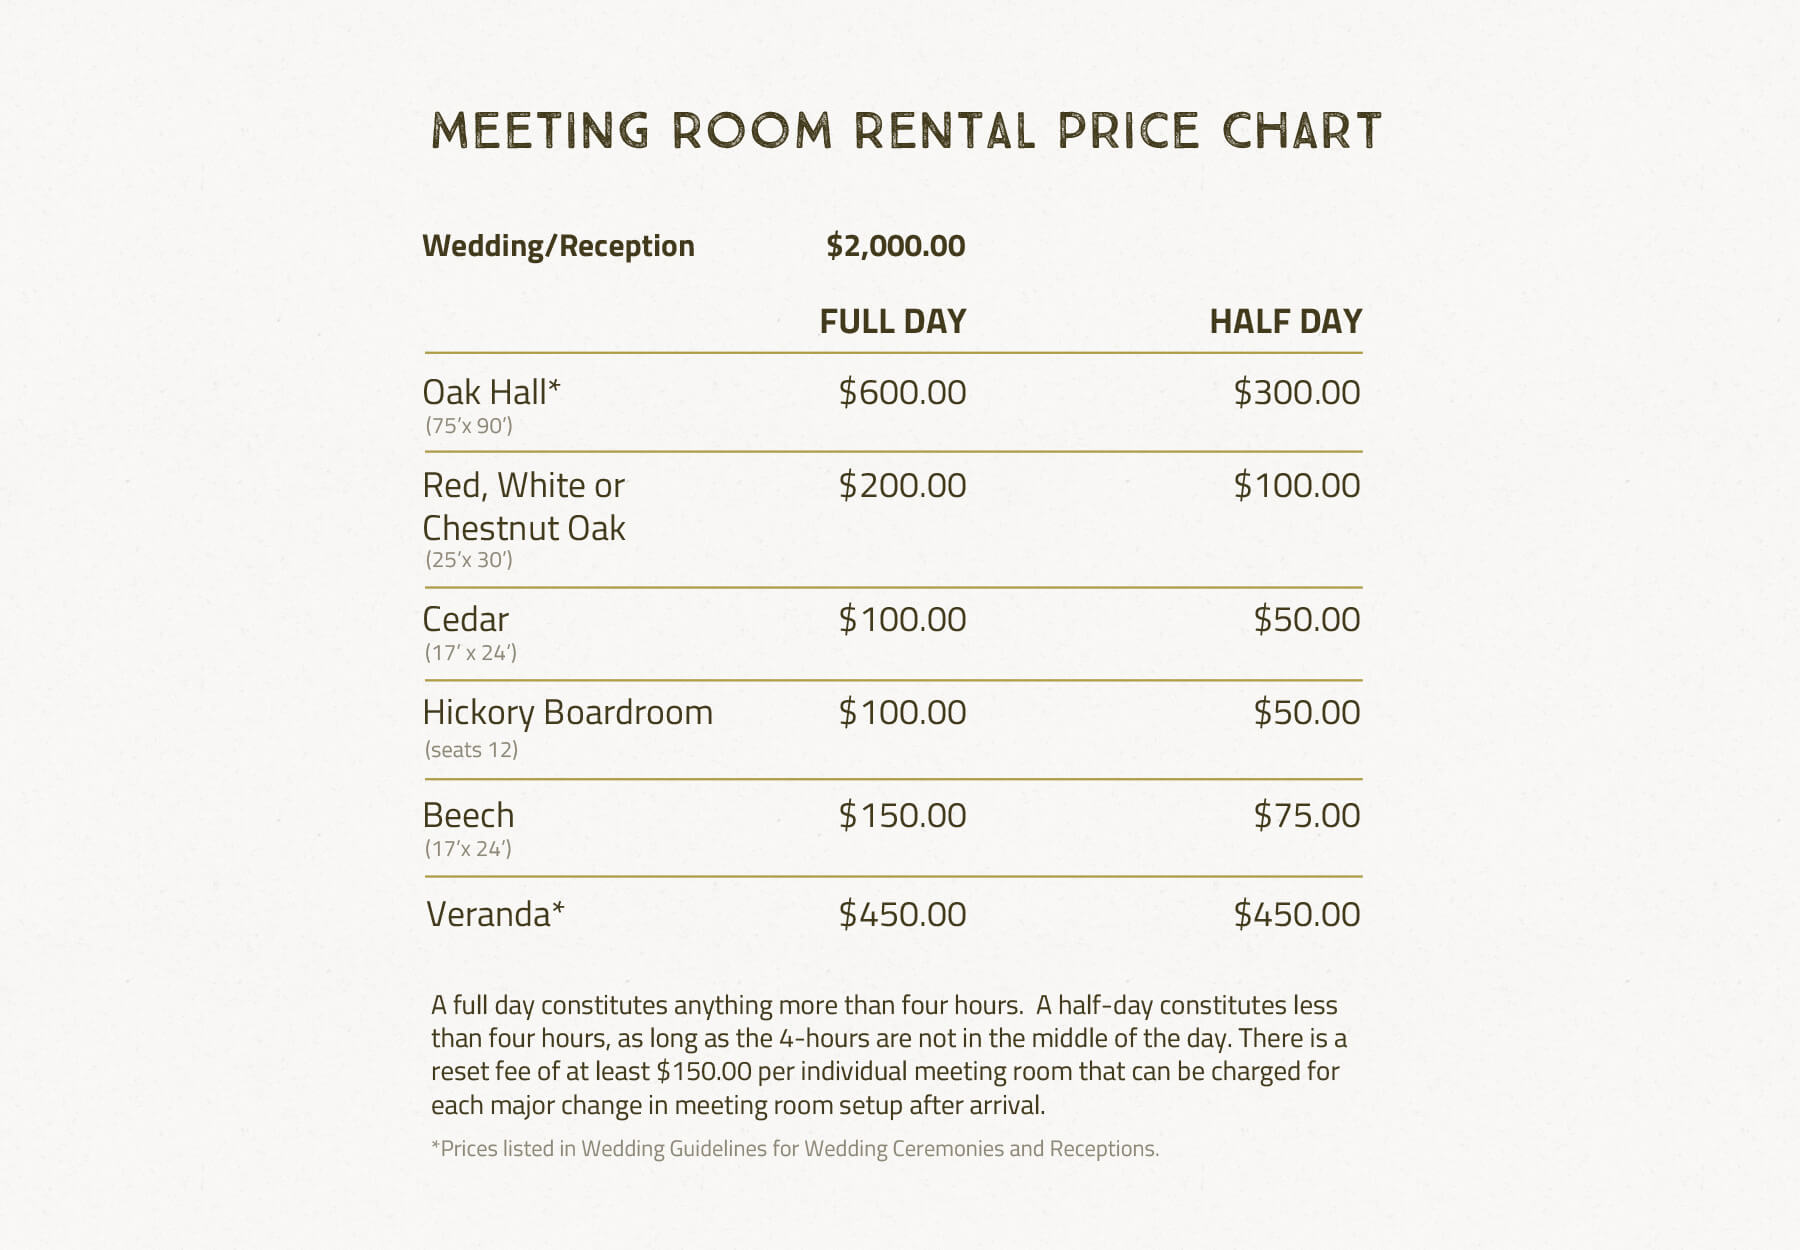 Amicalola Falls Adventure Lodge Meeting Events Facilities Meeting Room Rental Price Chart